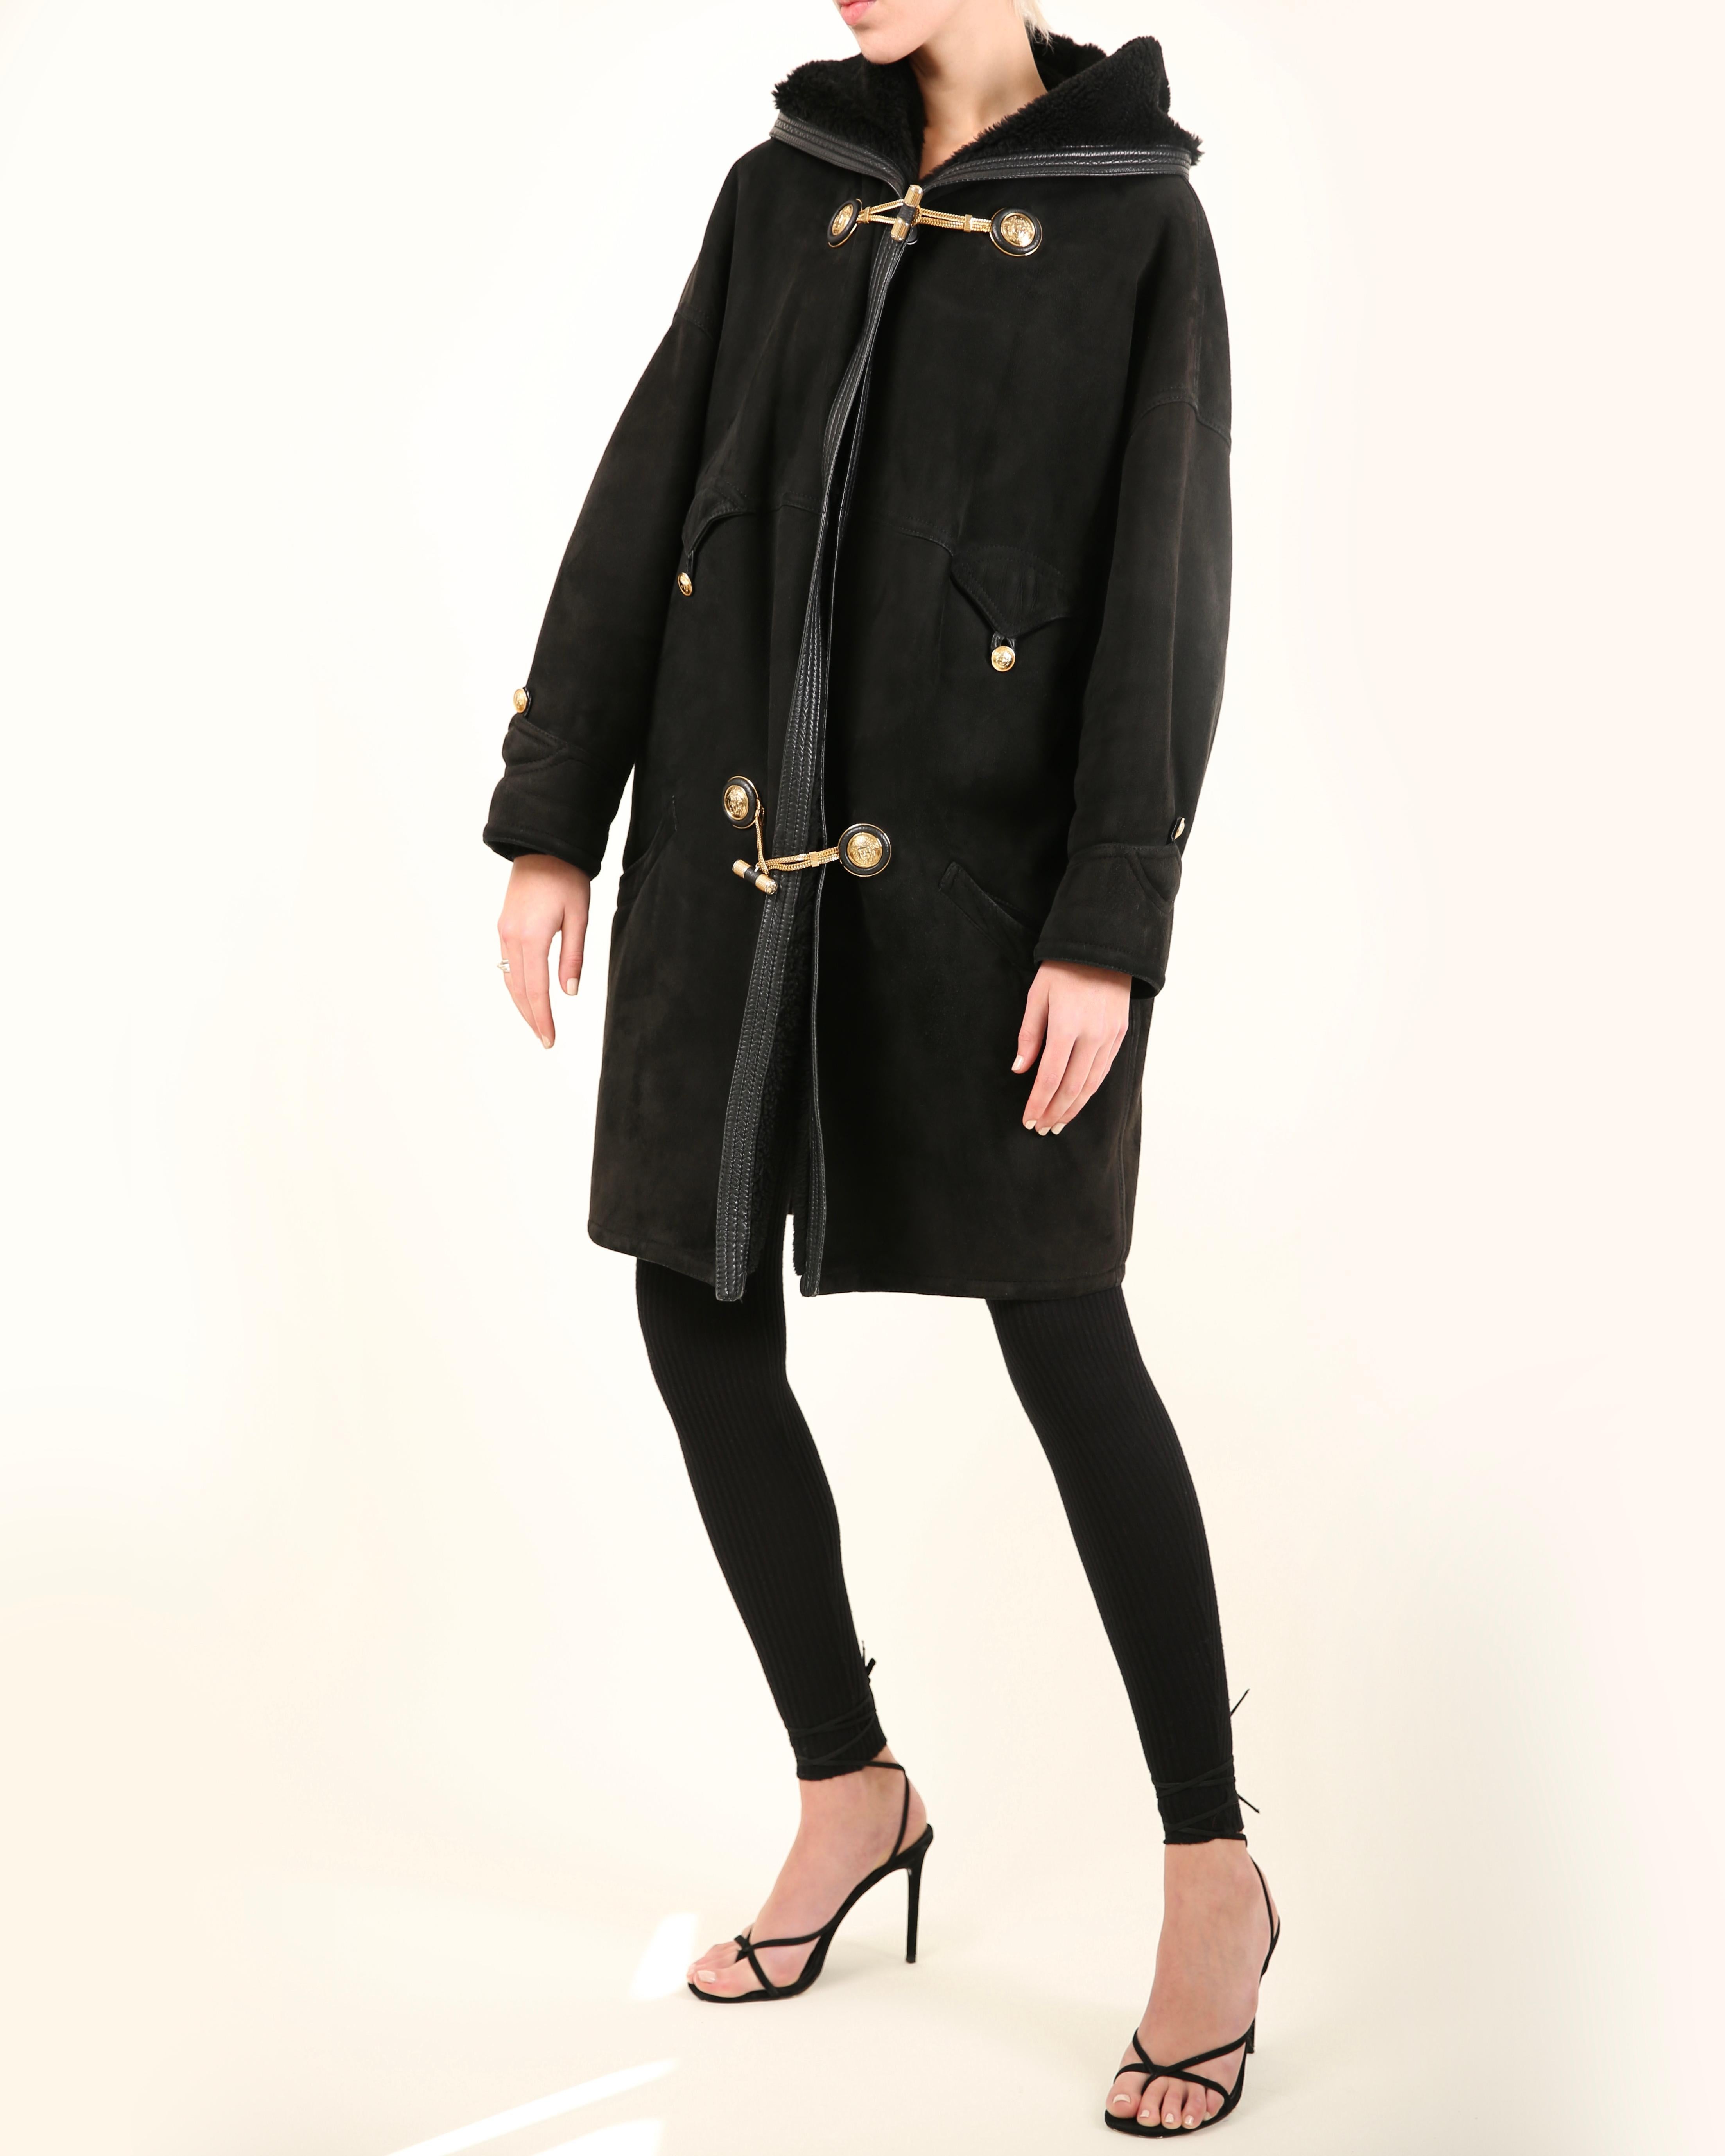 Gianni Versace 90's XS - L black leather suede shearling bondage coat jacket For Sale 2